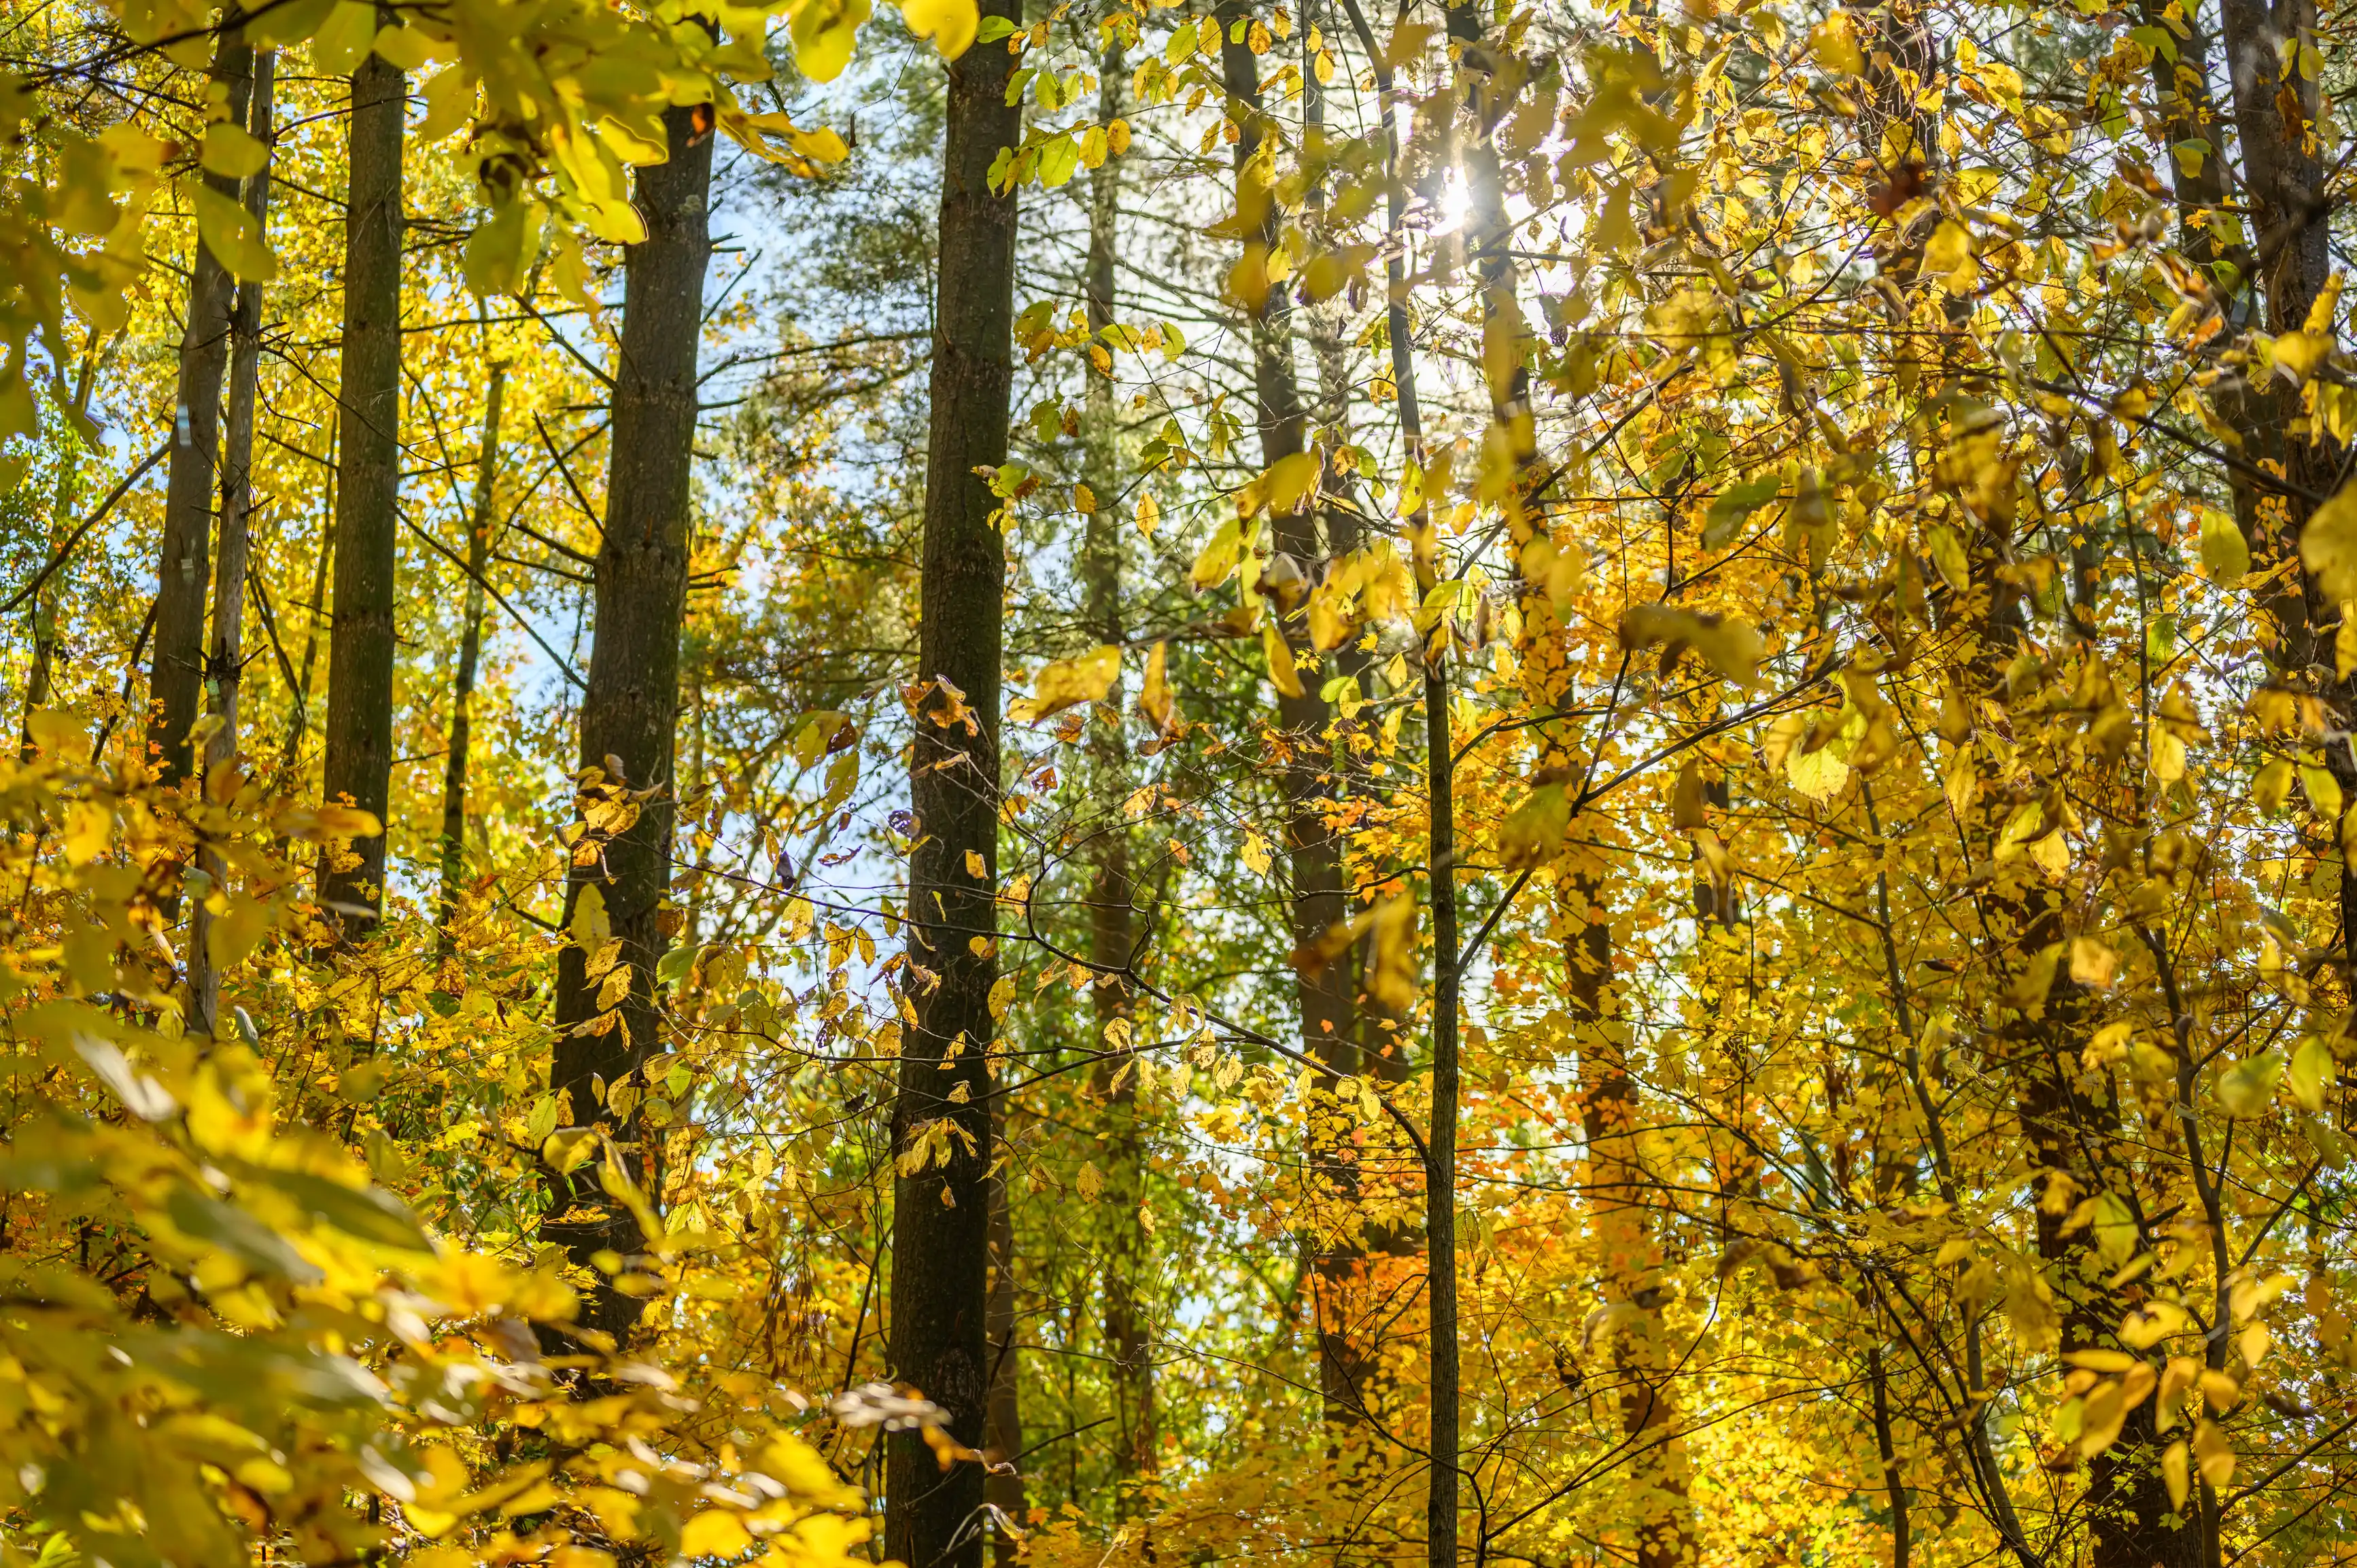 Sunlight filtering through golden autumn leaves in a dense forest.